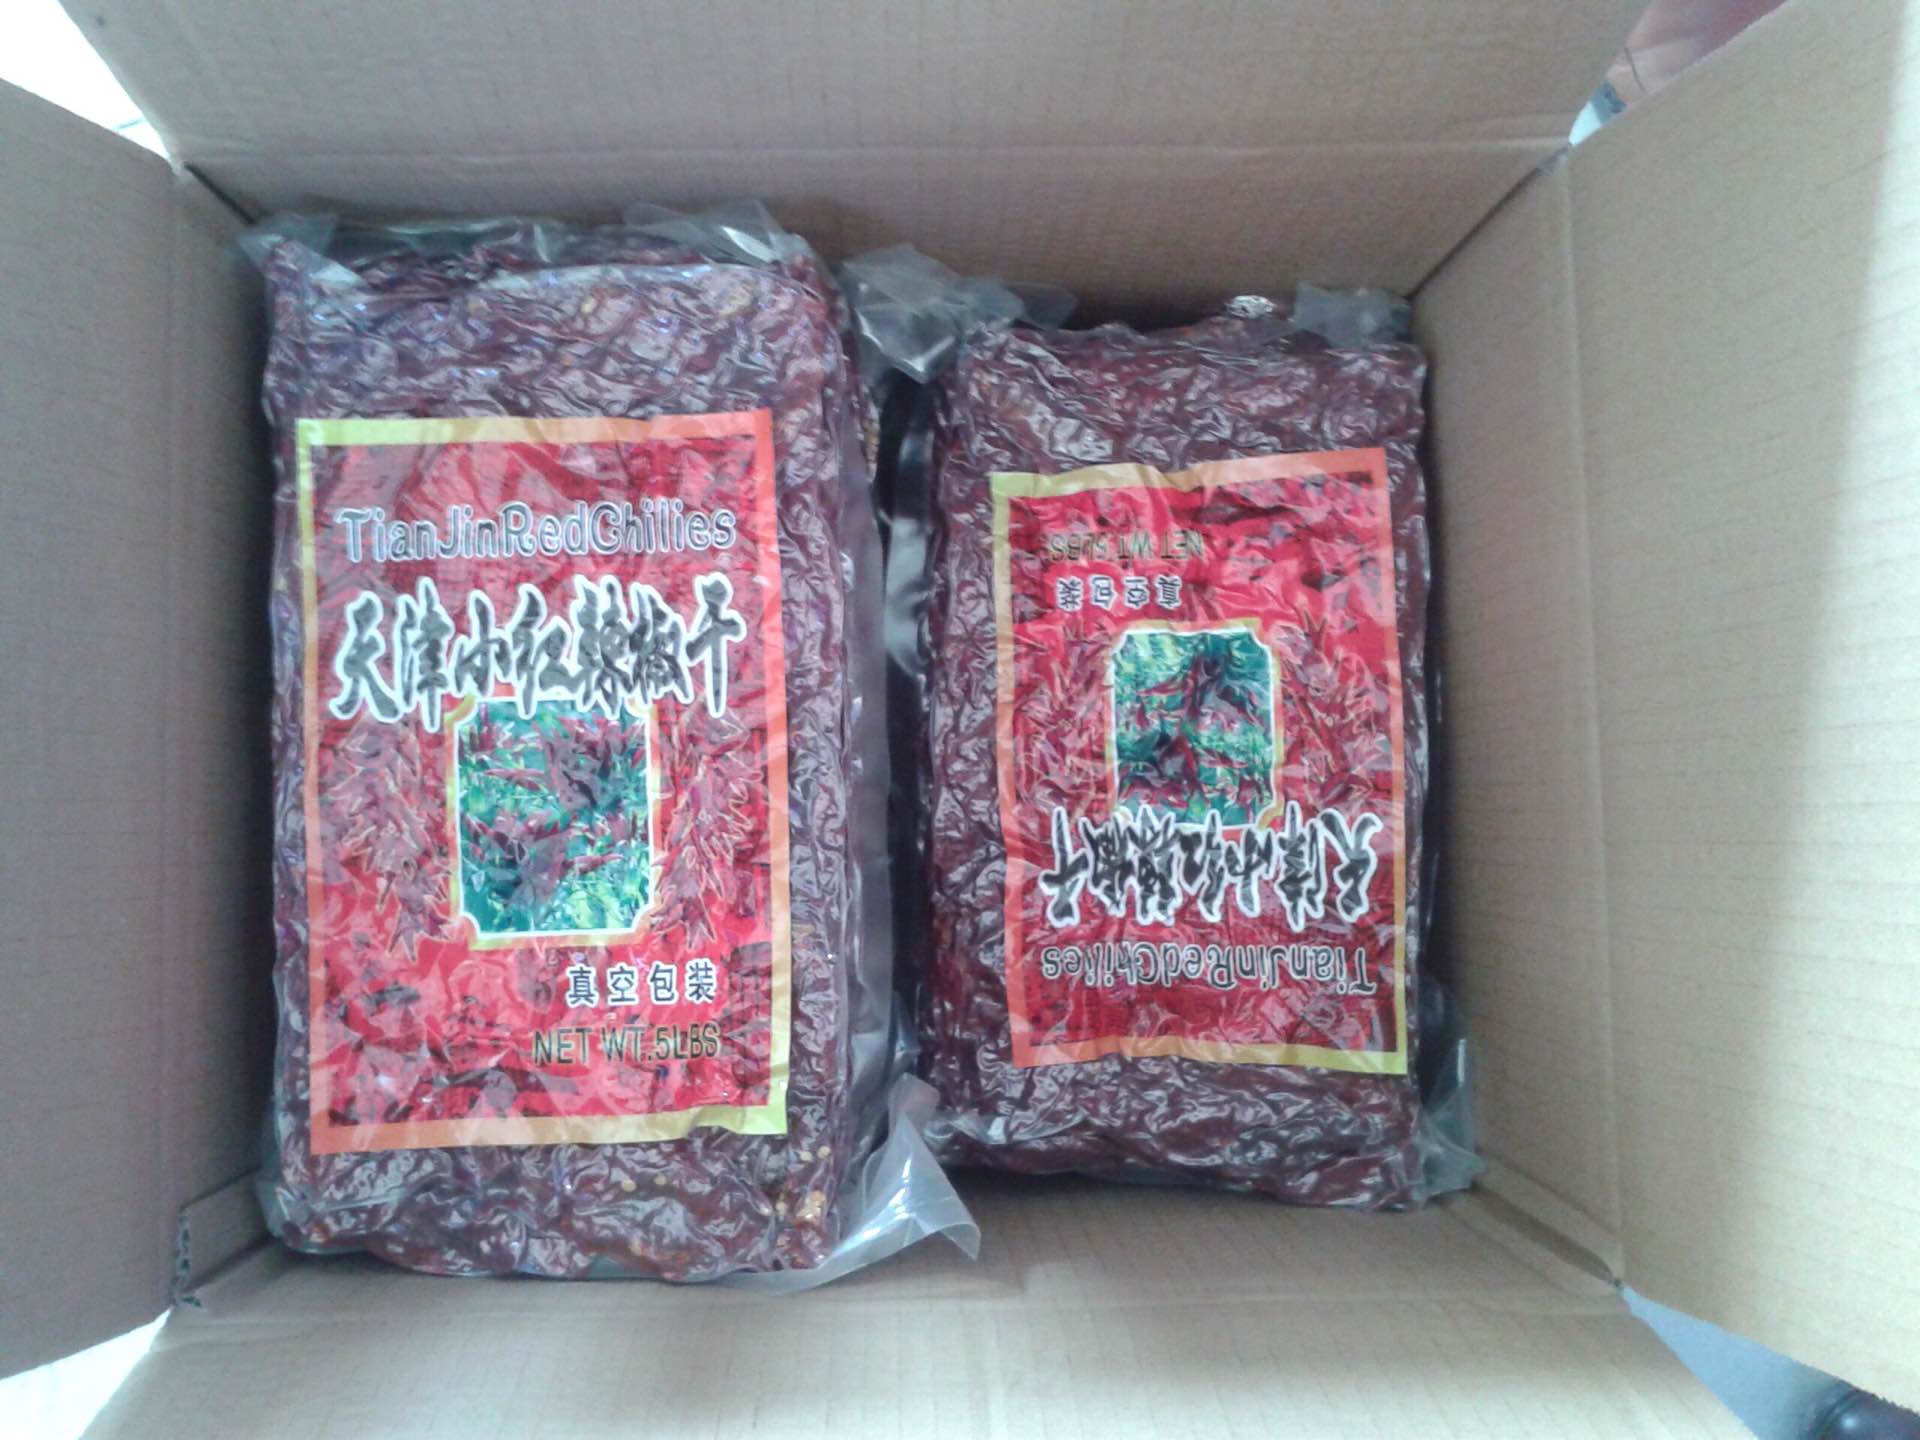 Supplier Dried Best Chilli Pepper Red Hot Chilli Powder